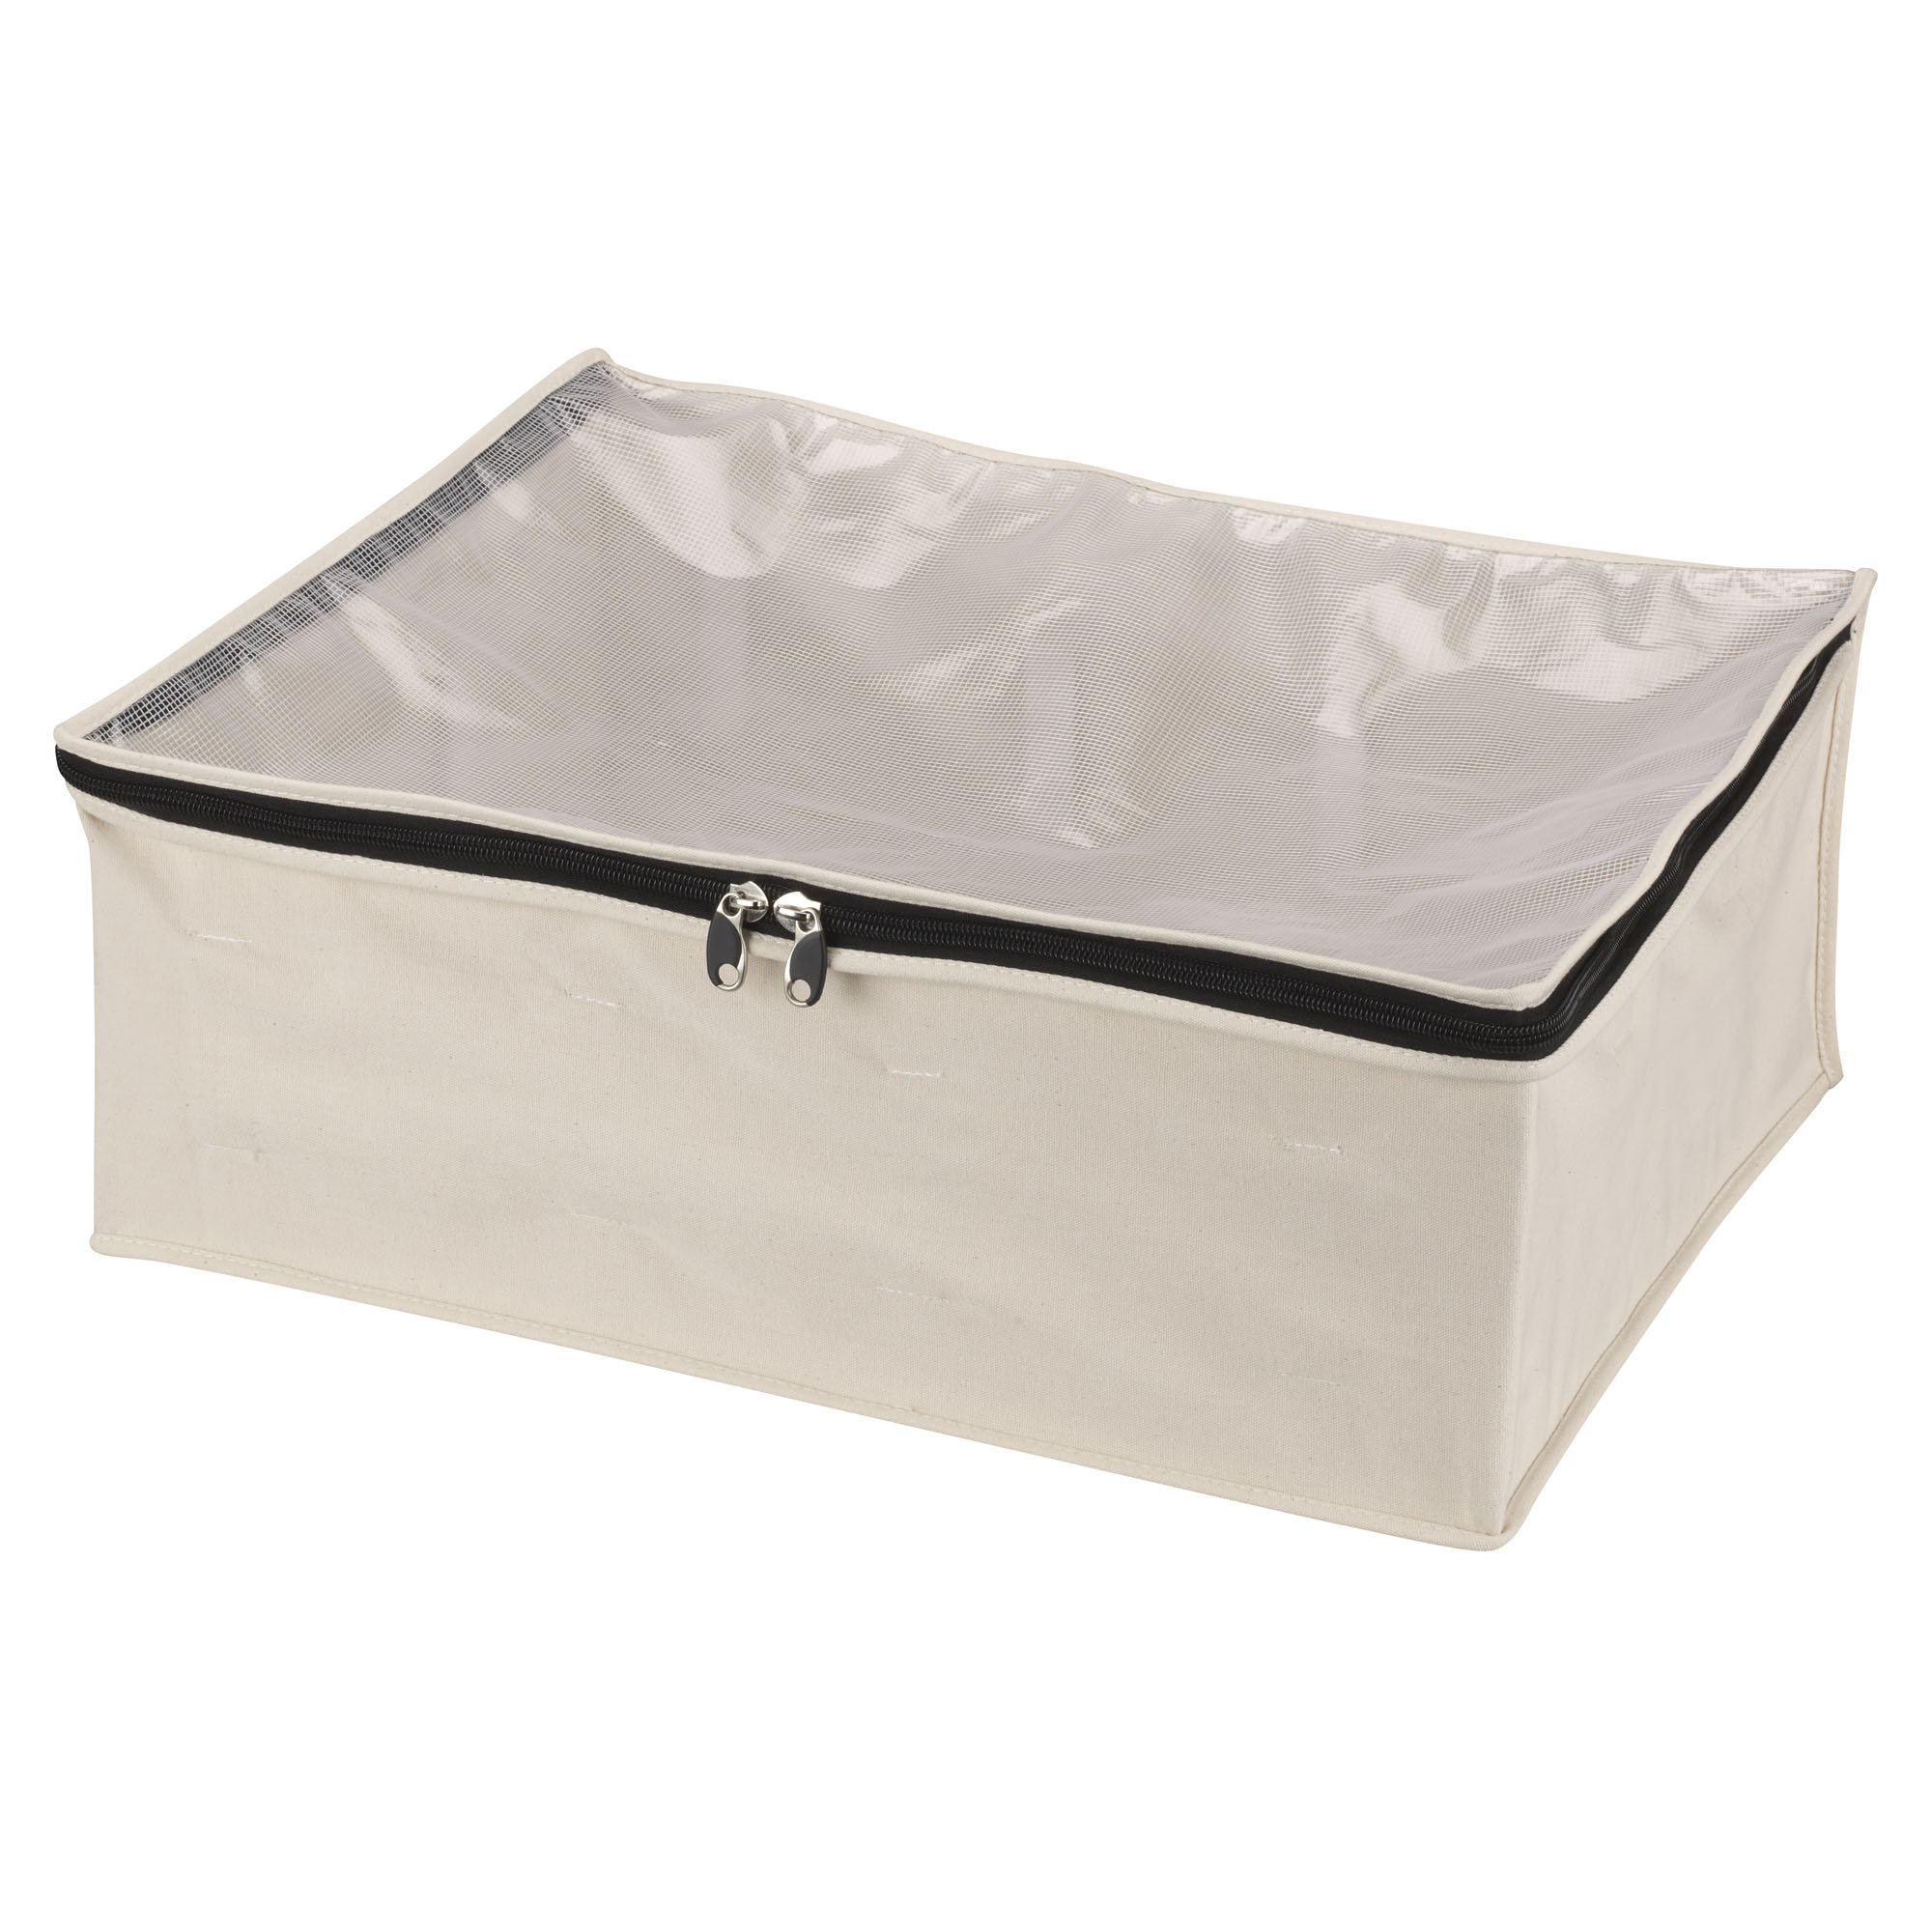 NORDIC Compactor storage box for Blanket Case Fabric Aqua Green  70 x 50 x 30 cm 